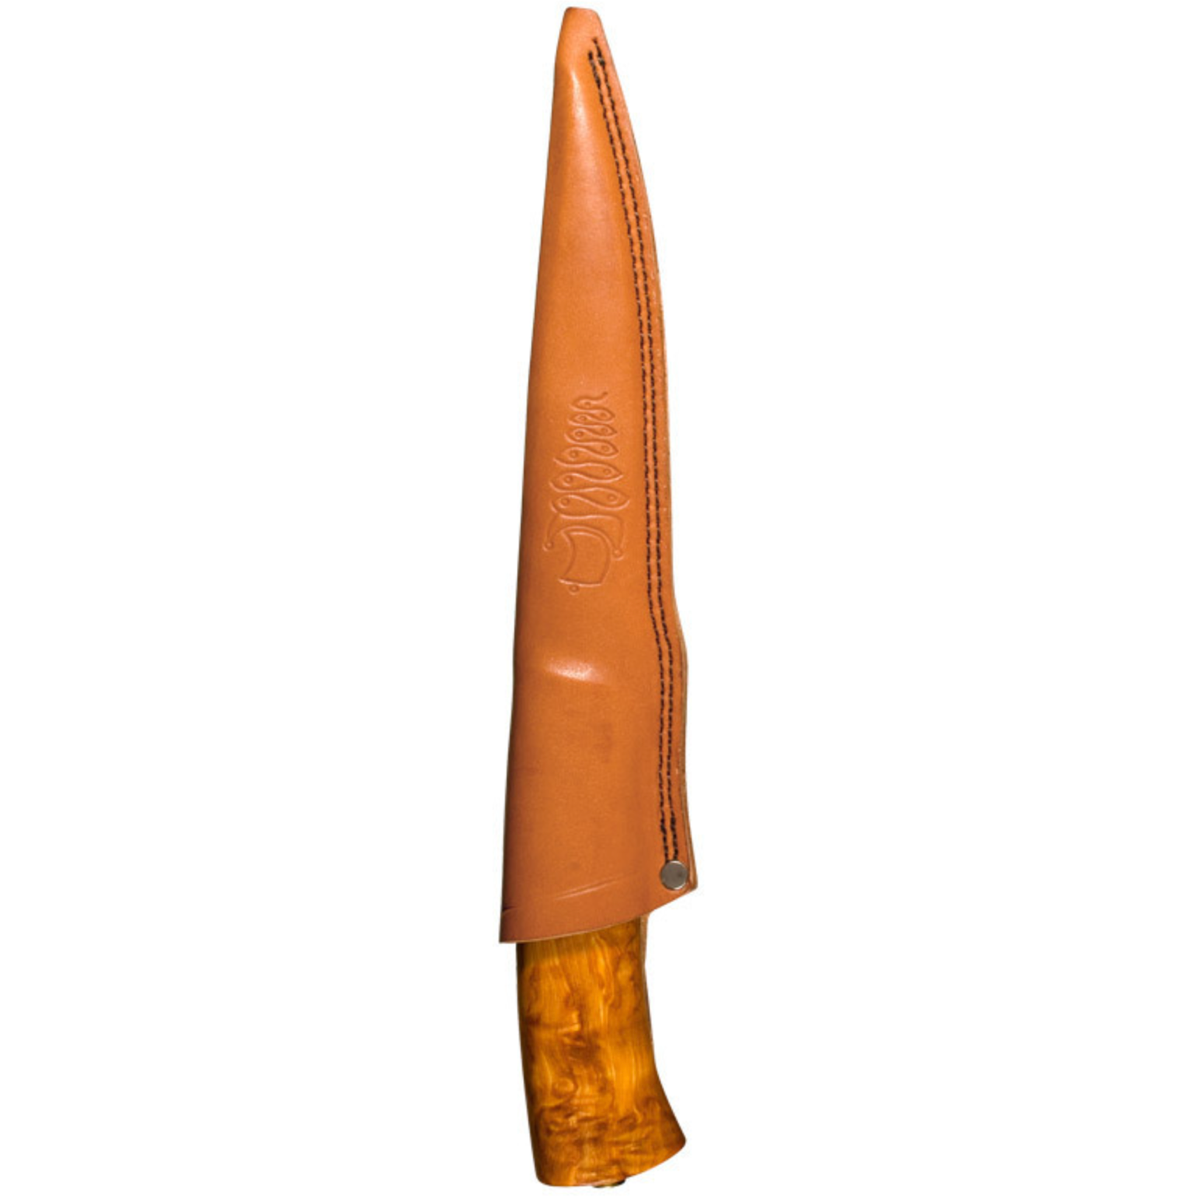 Steinbit Flexible Filleting Knife - 153mm Blade